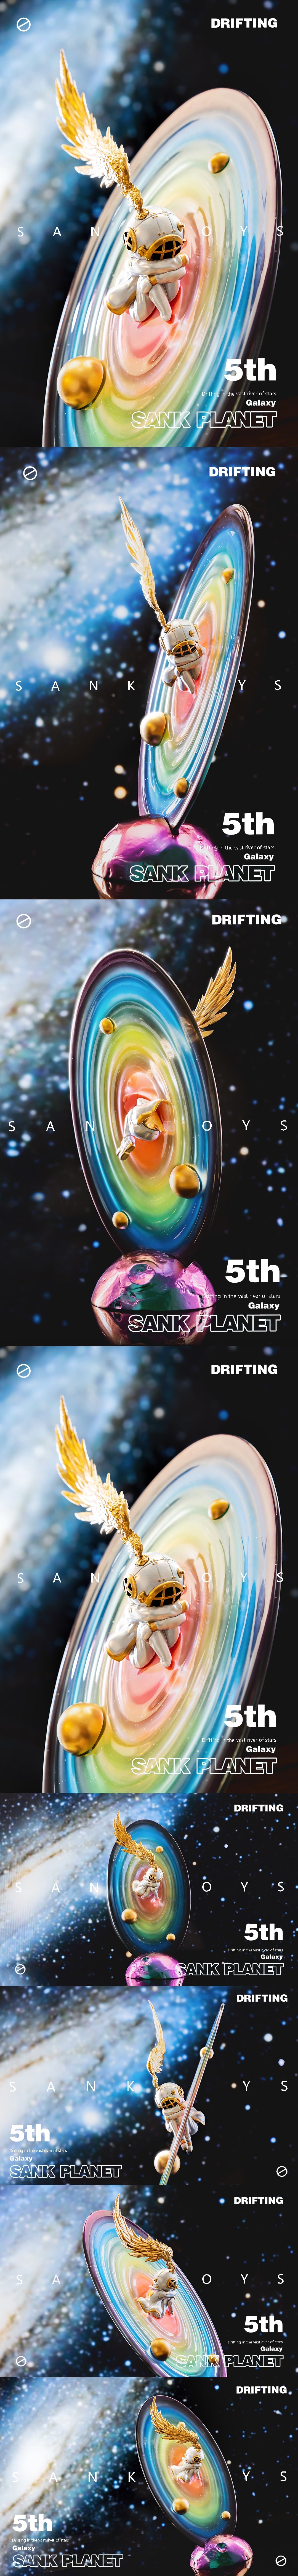 SANK TOYS Sank Planet Galaxy Collectible Figurine